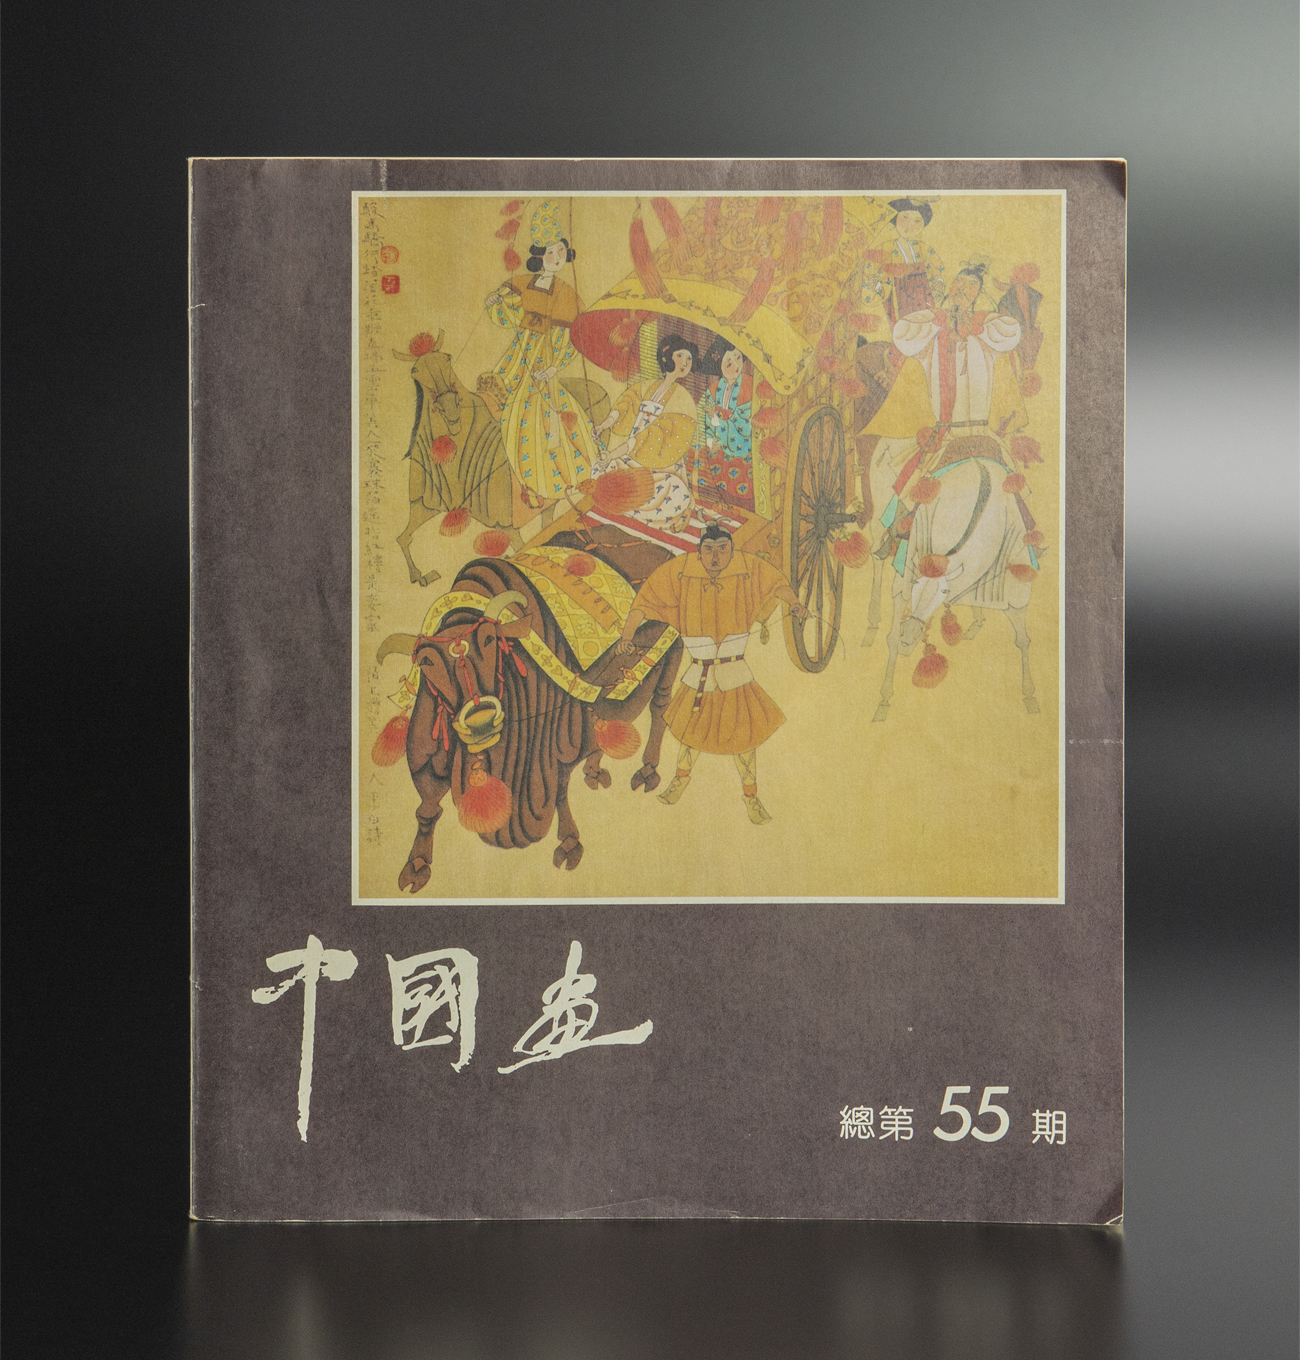 お得意価格の-鏡框 •額装• 中国 古美術 - corseterialaconchita.mx